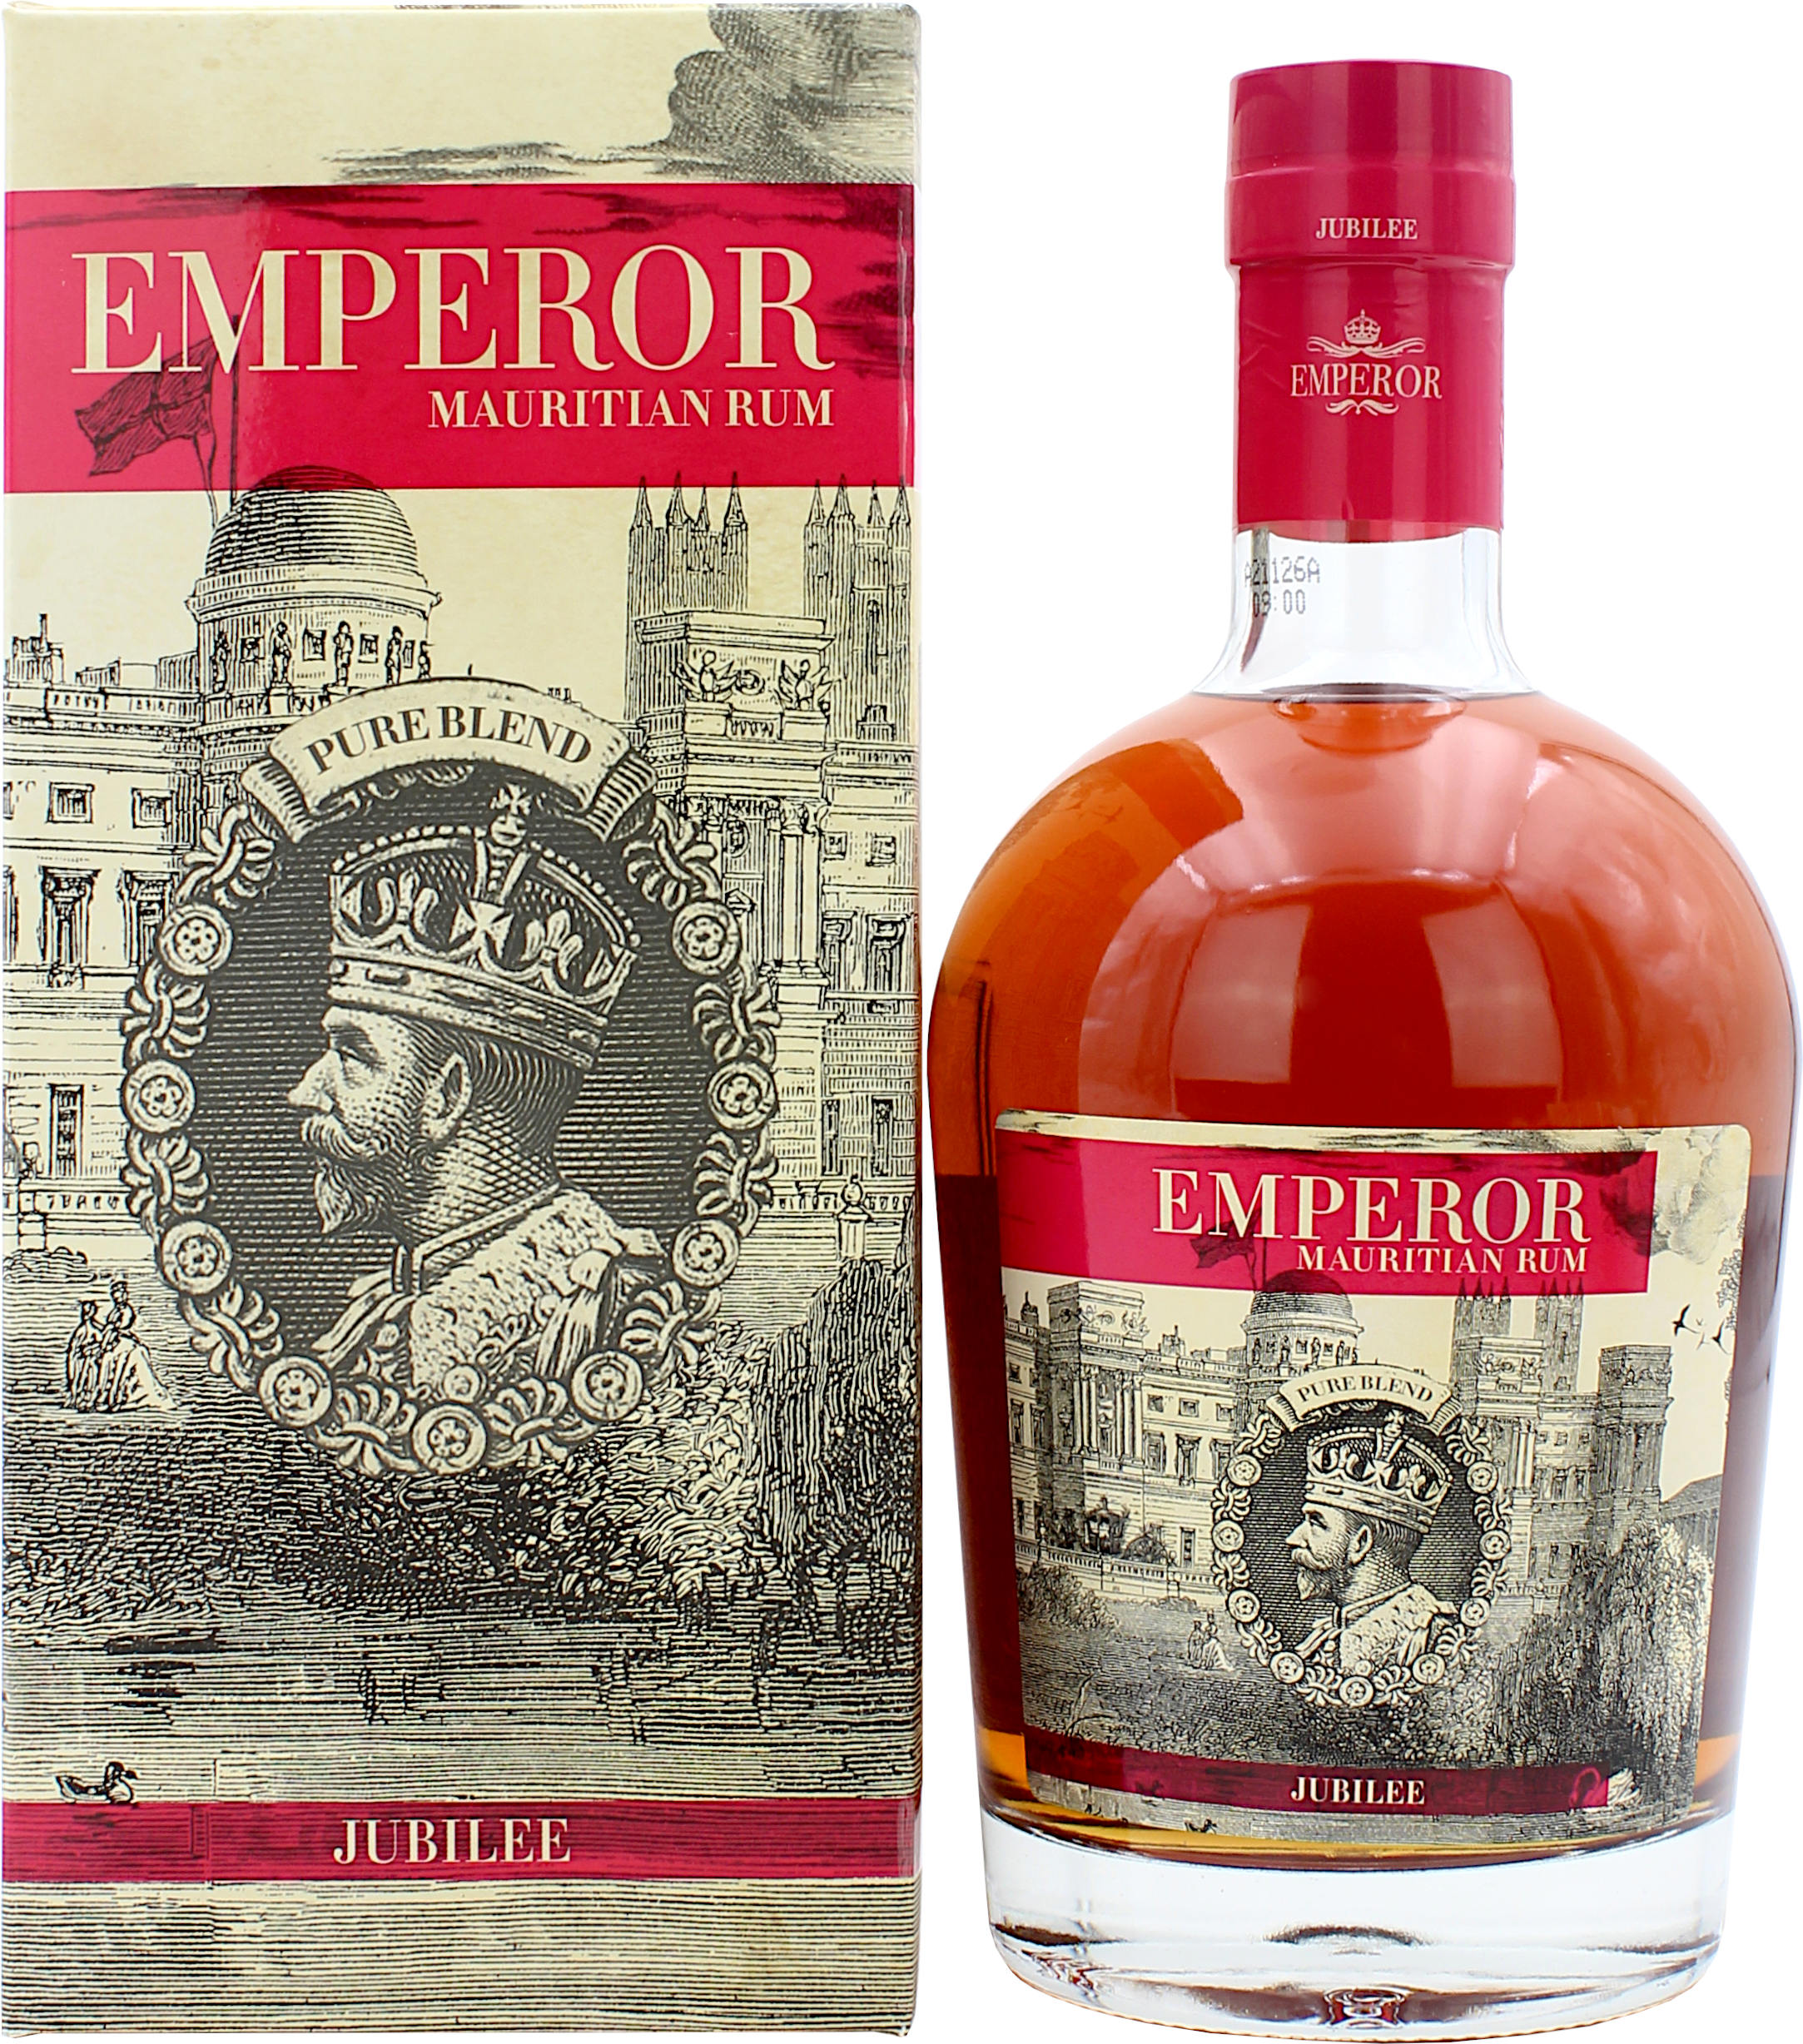 Emperor Mauritian Rum Jubilee Edition 40.0% 0,7l